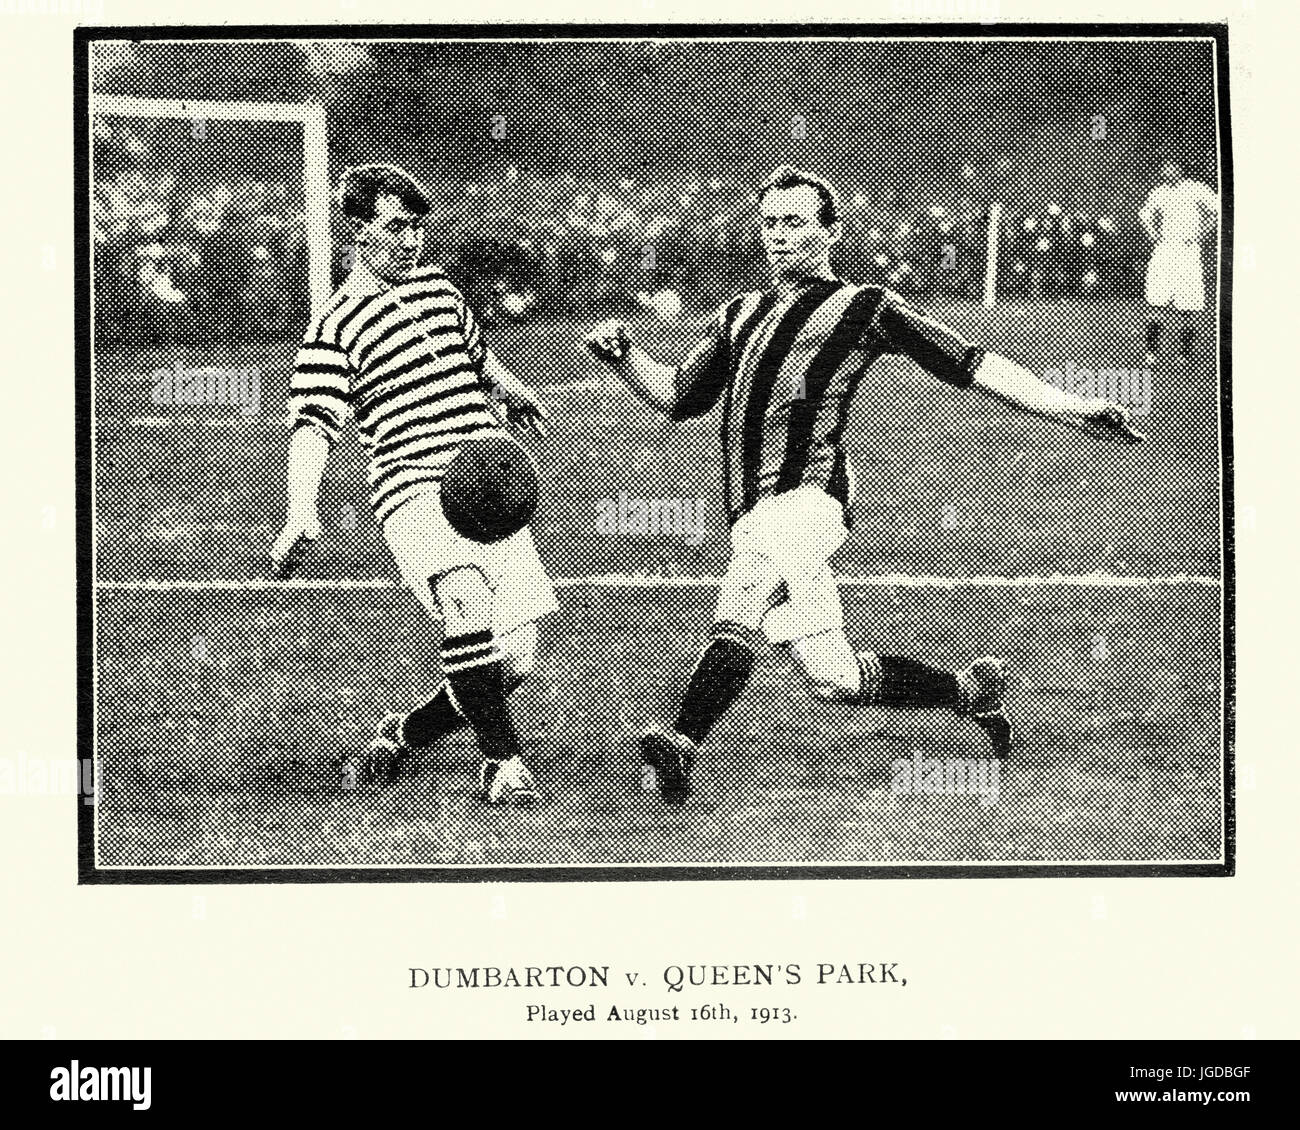 Football match between Dumbarton and Queen's Park, 1913 Stock Photo